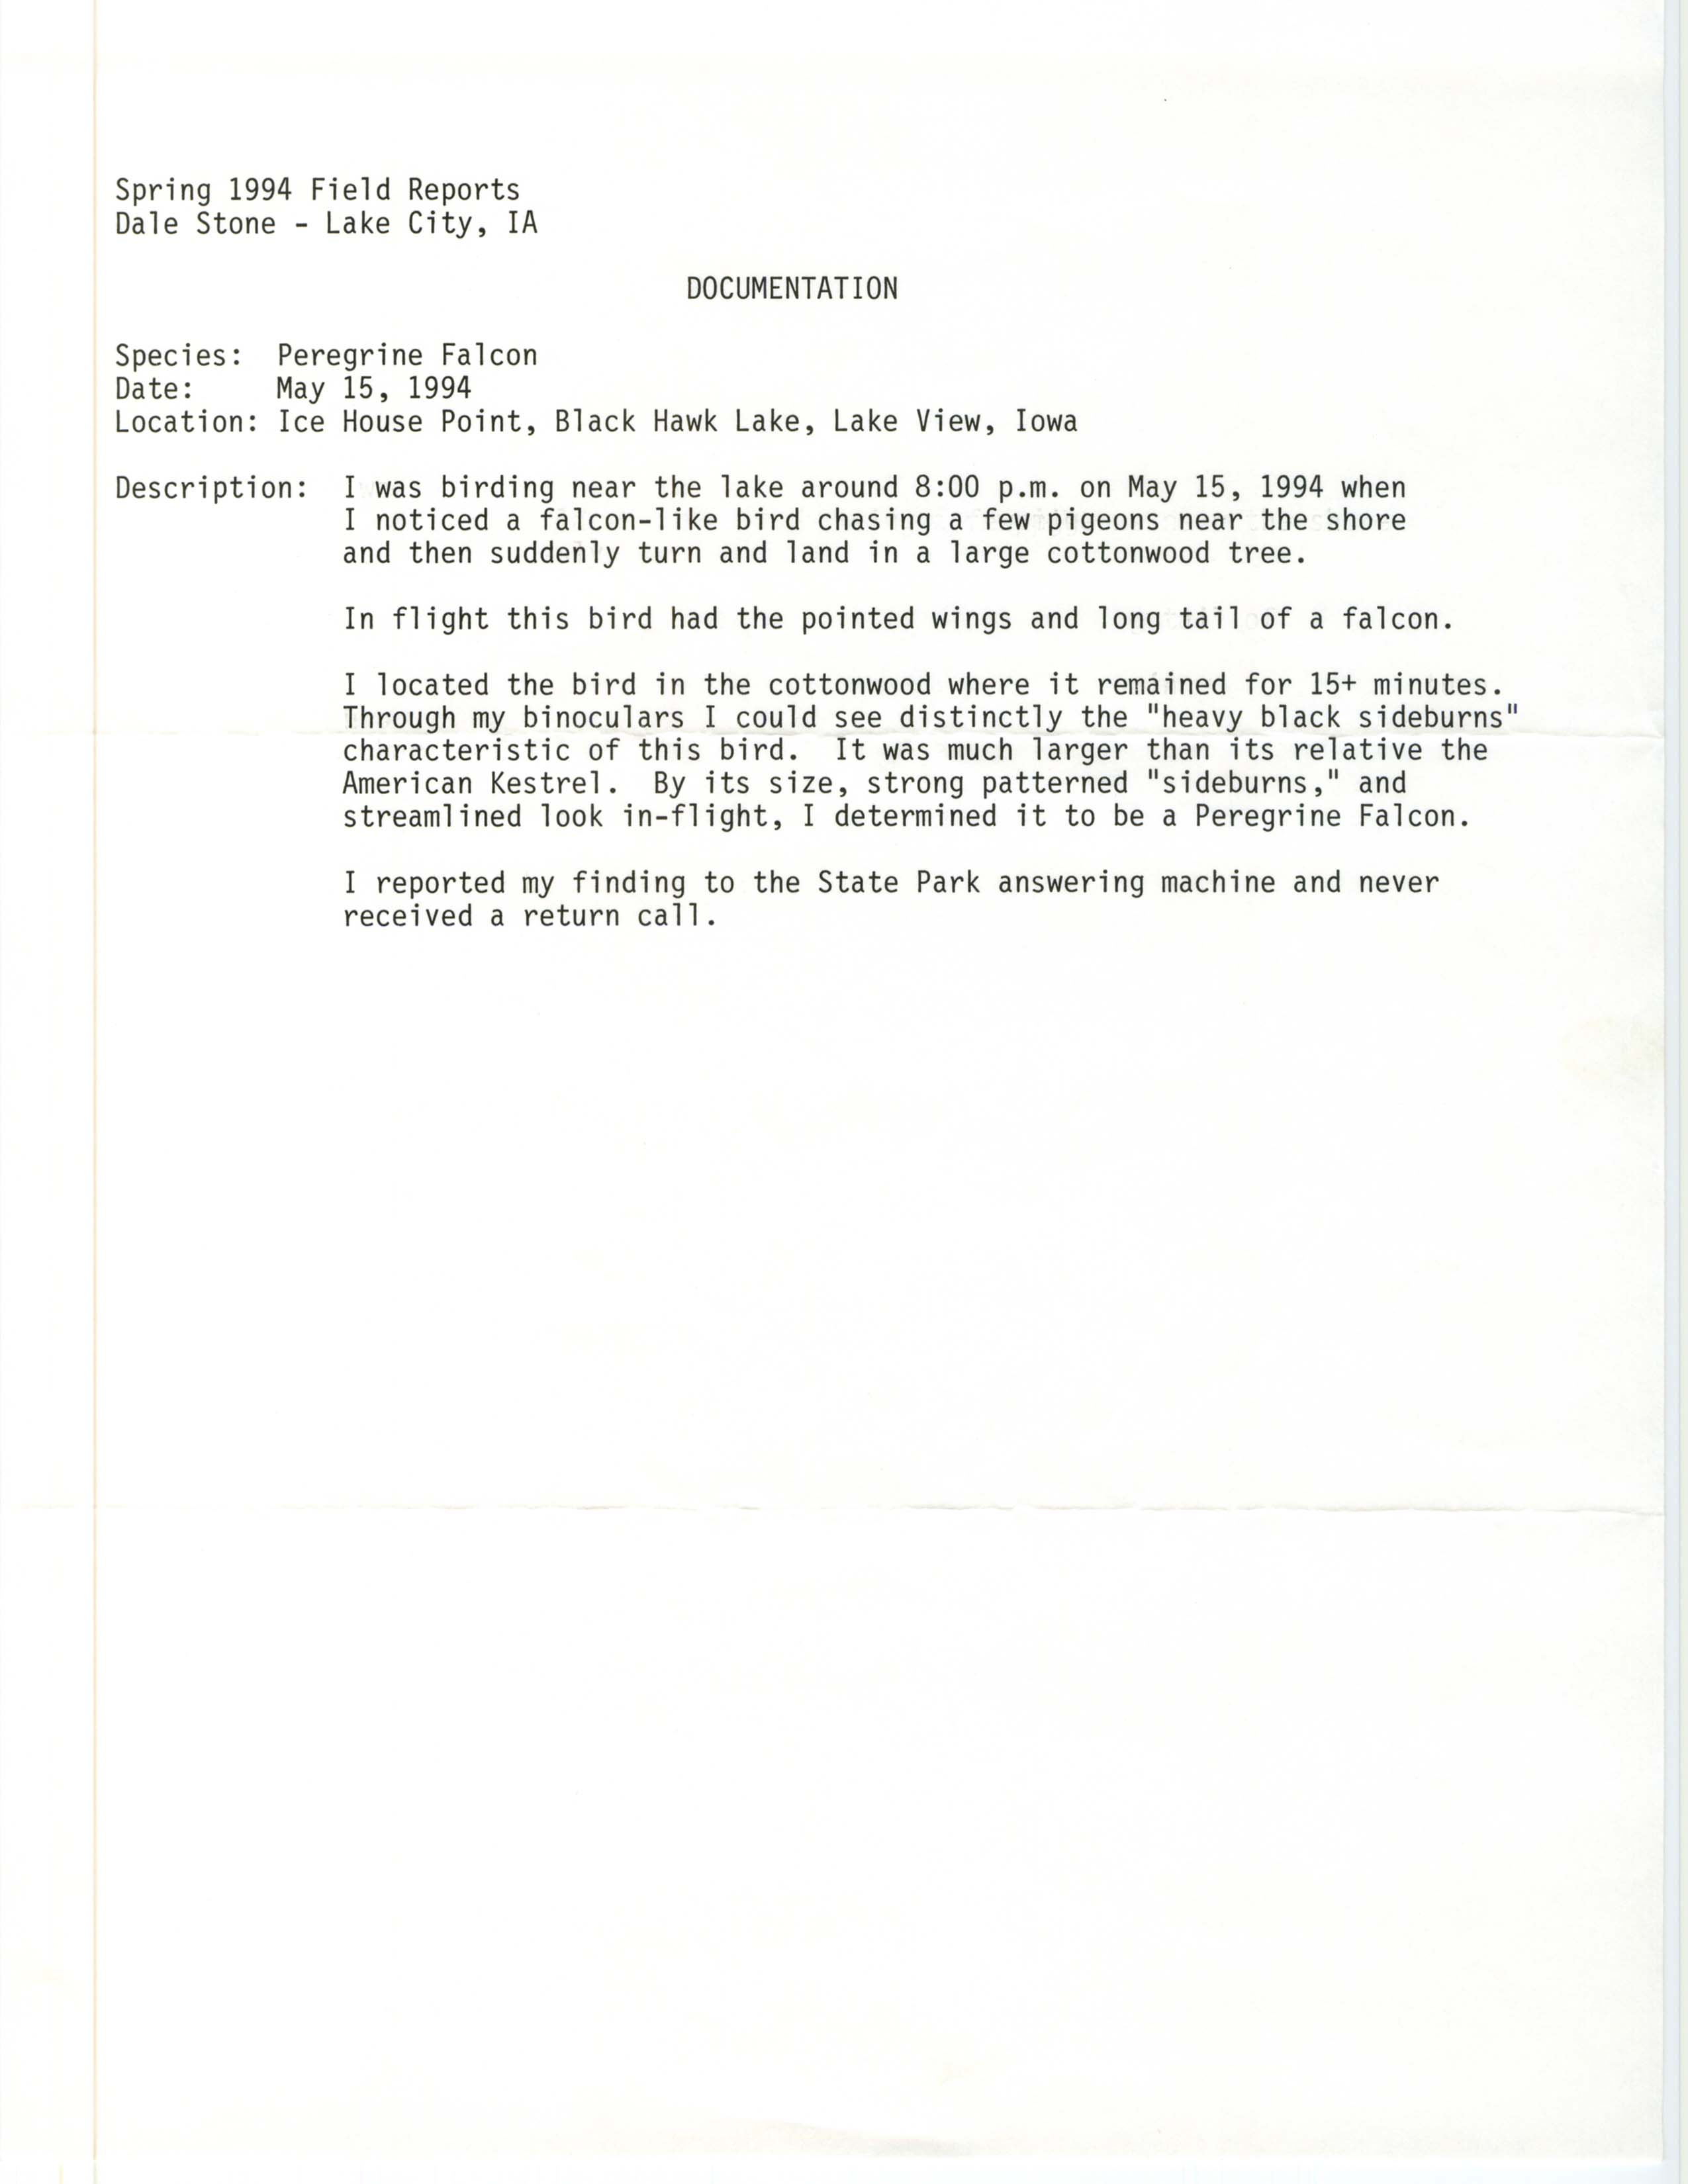 Rare bird documentation form for Peregrine Falcon at Black Hawk Lake, 1994